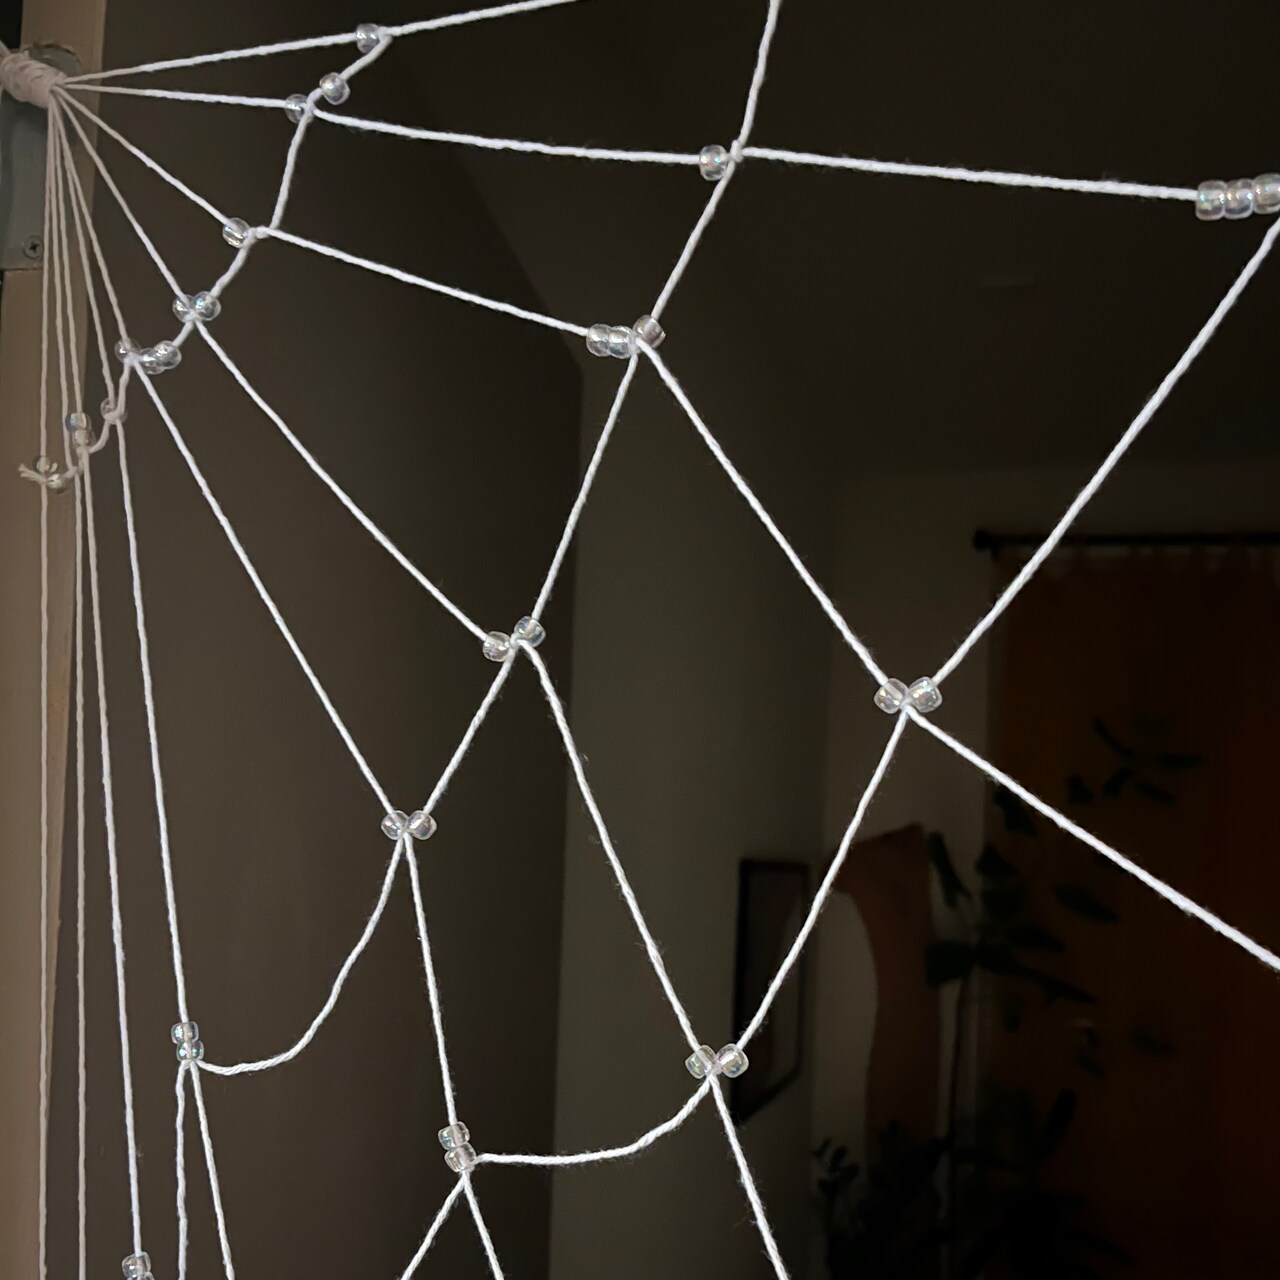 Giant Spooky Spiderweb with Lauren Hill @ProbablySketch